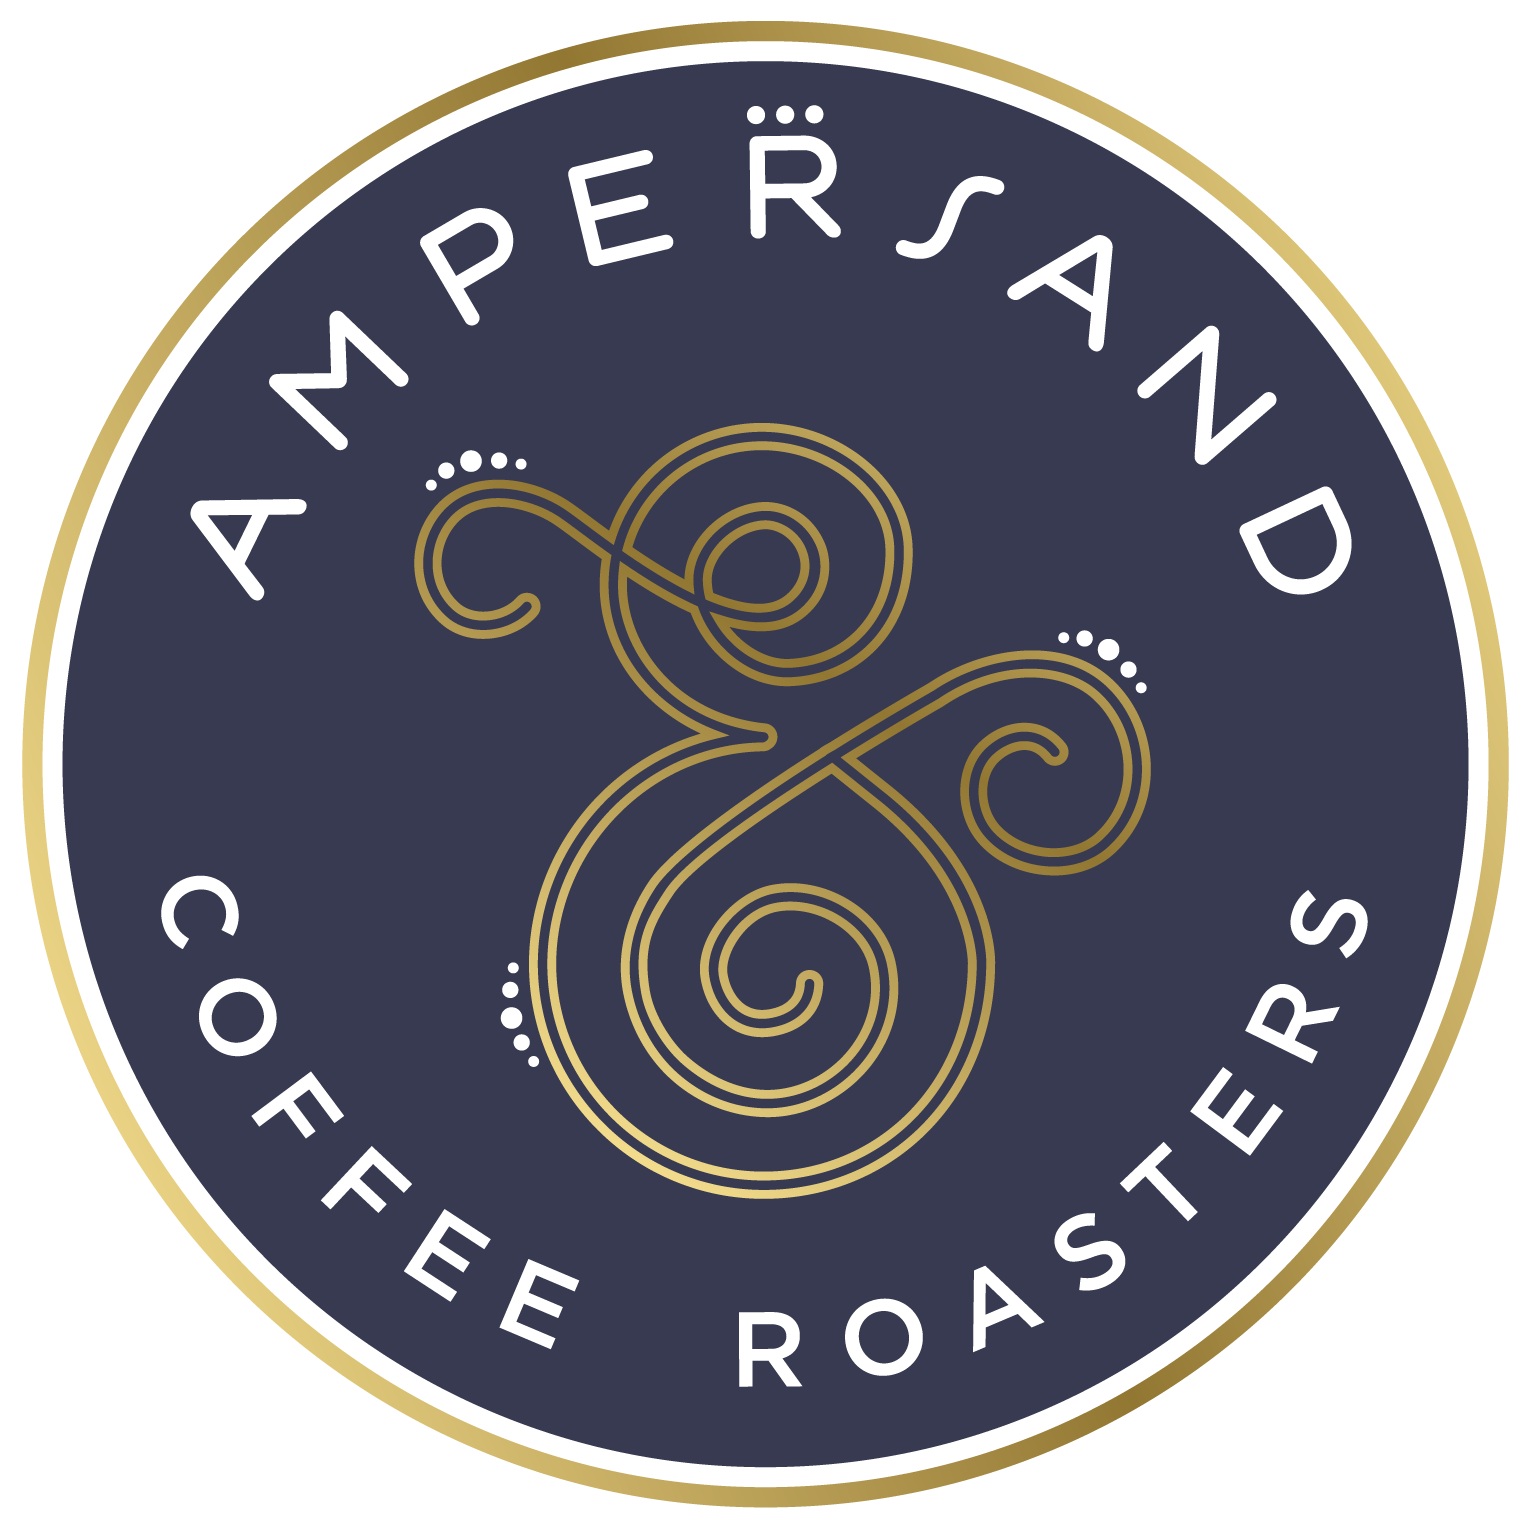 Ampersand Coffee Roasters